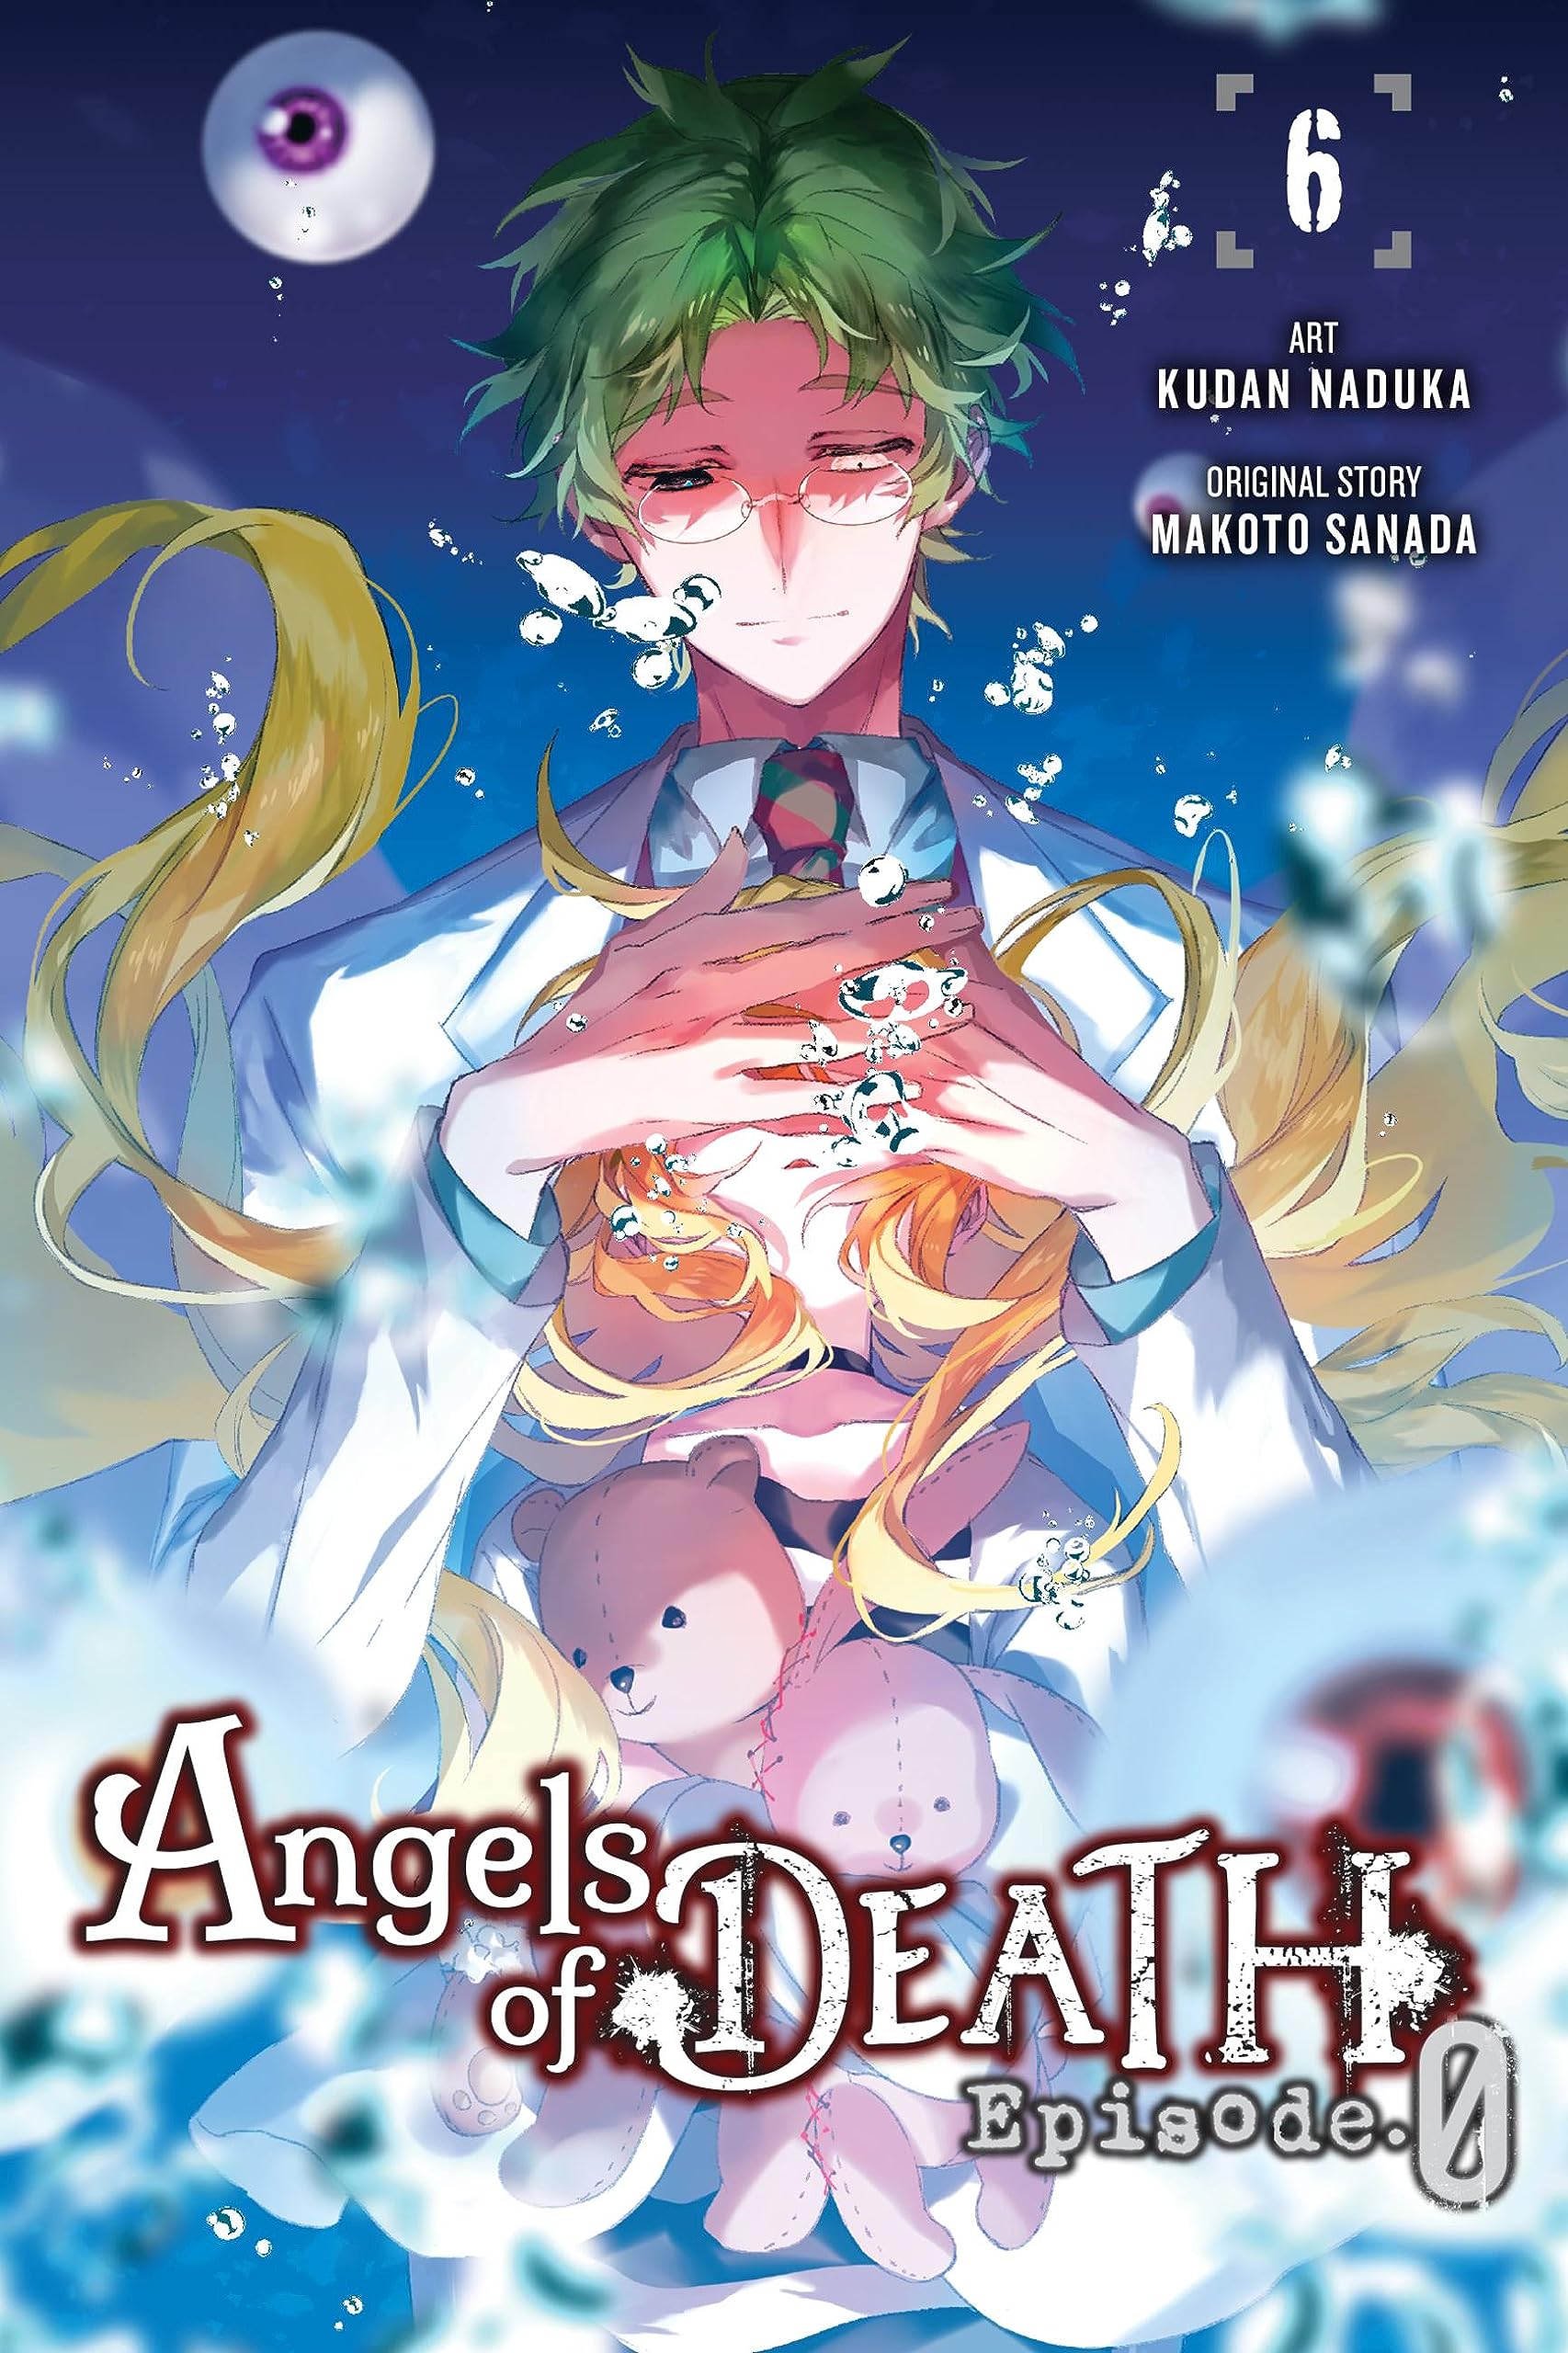 Angels of Death Episode.0 Vol. 06